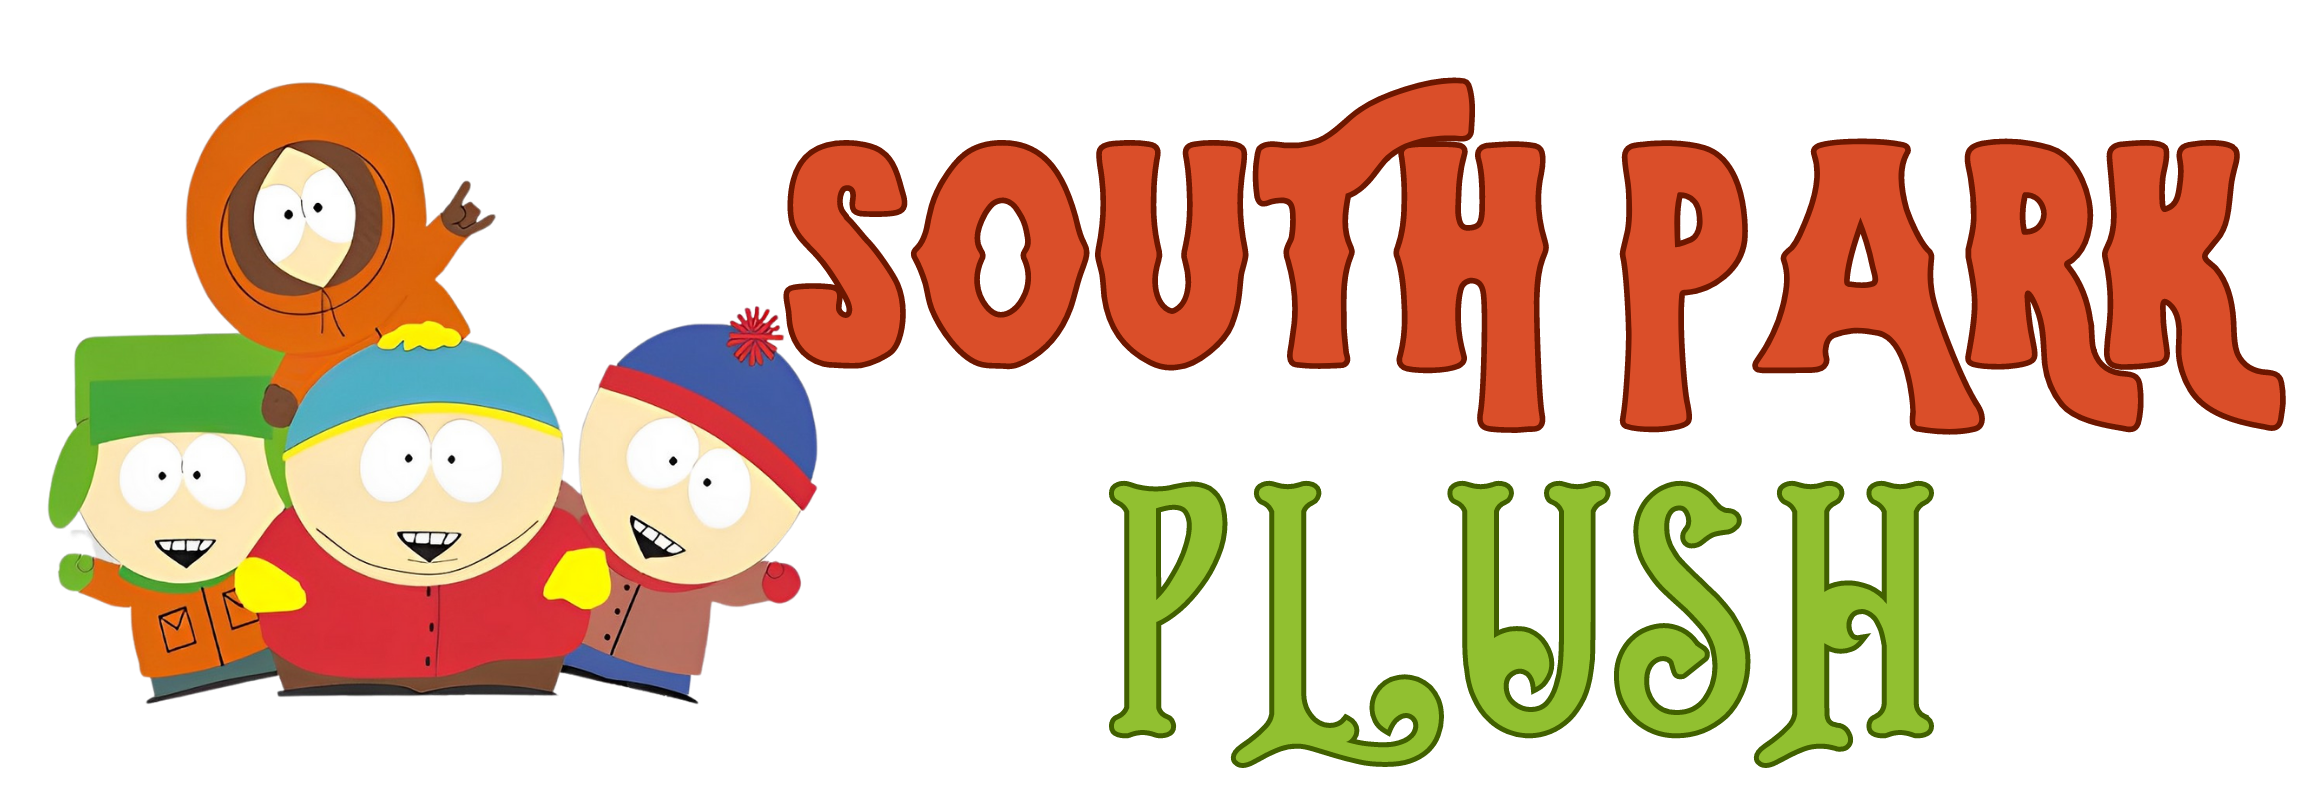 37 - South Park Plush